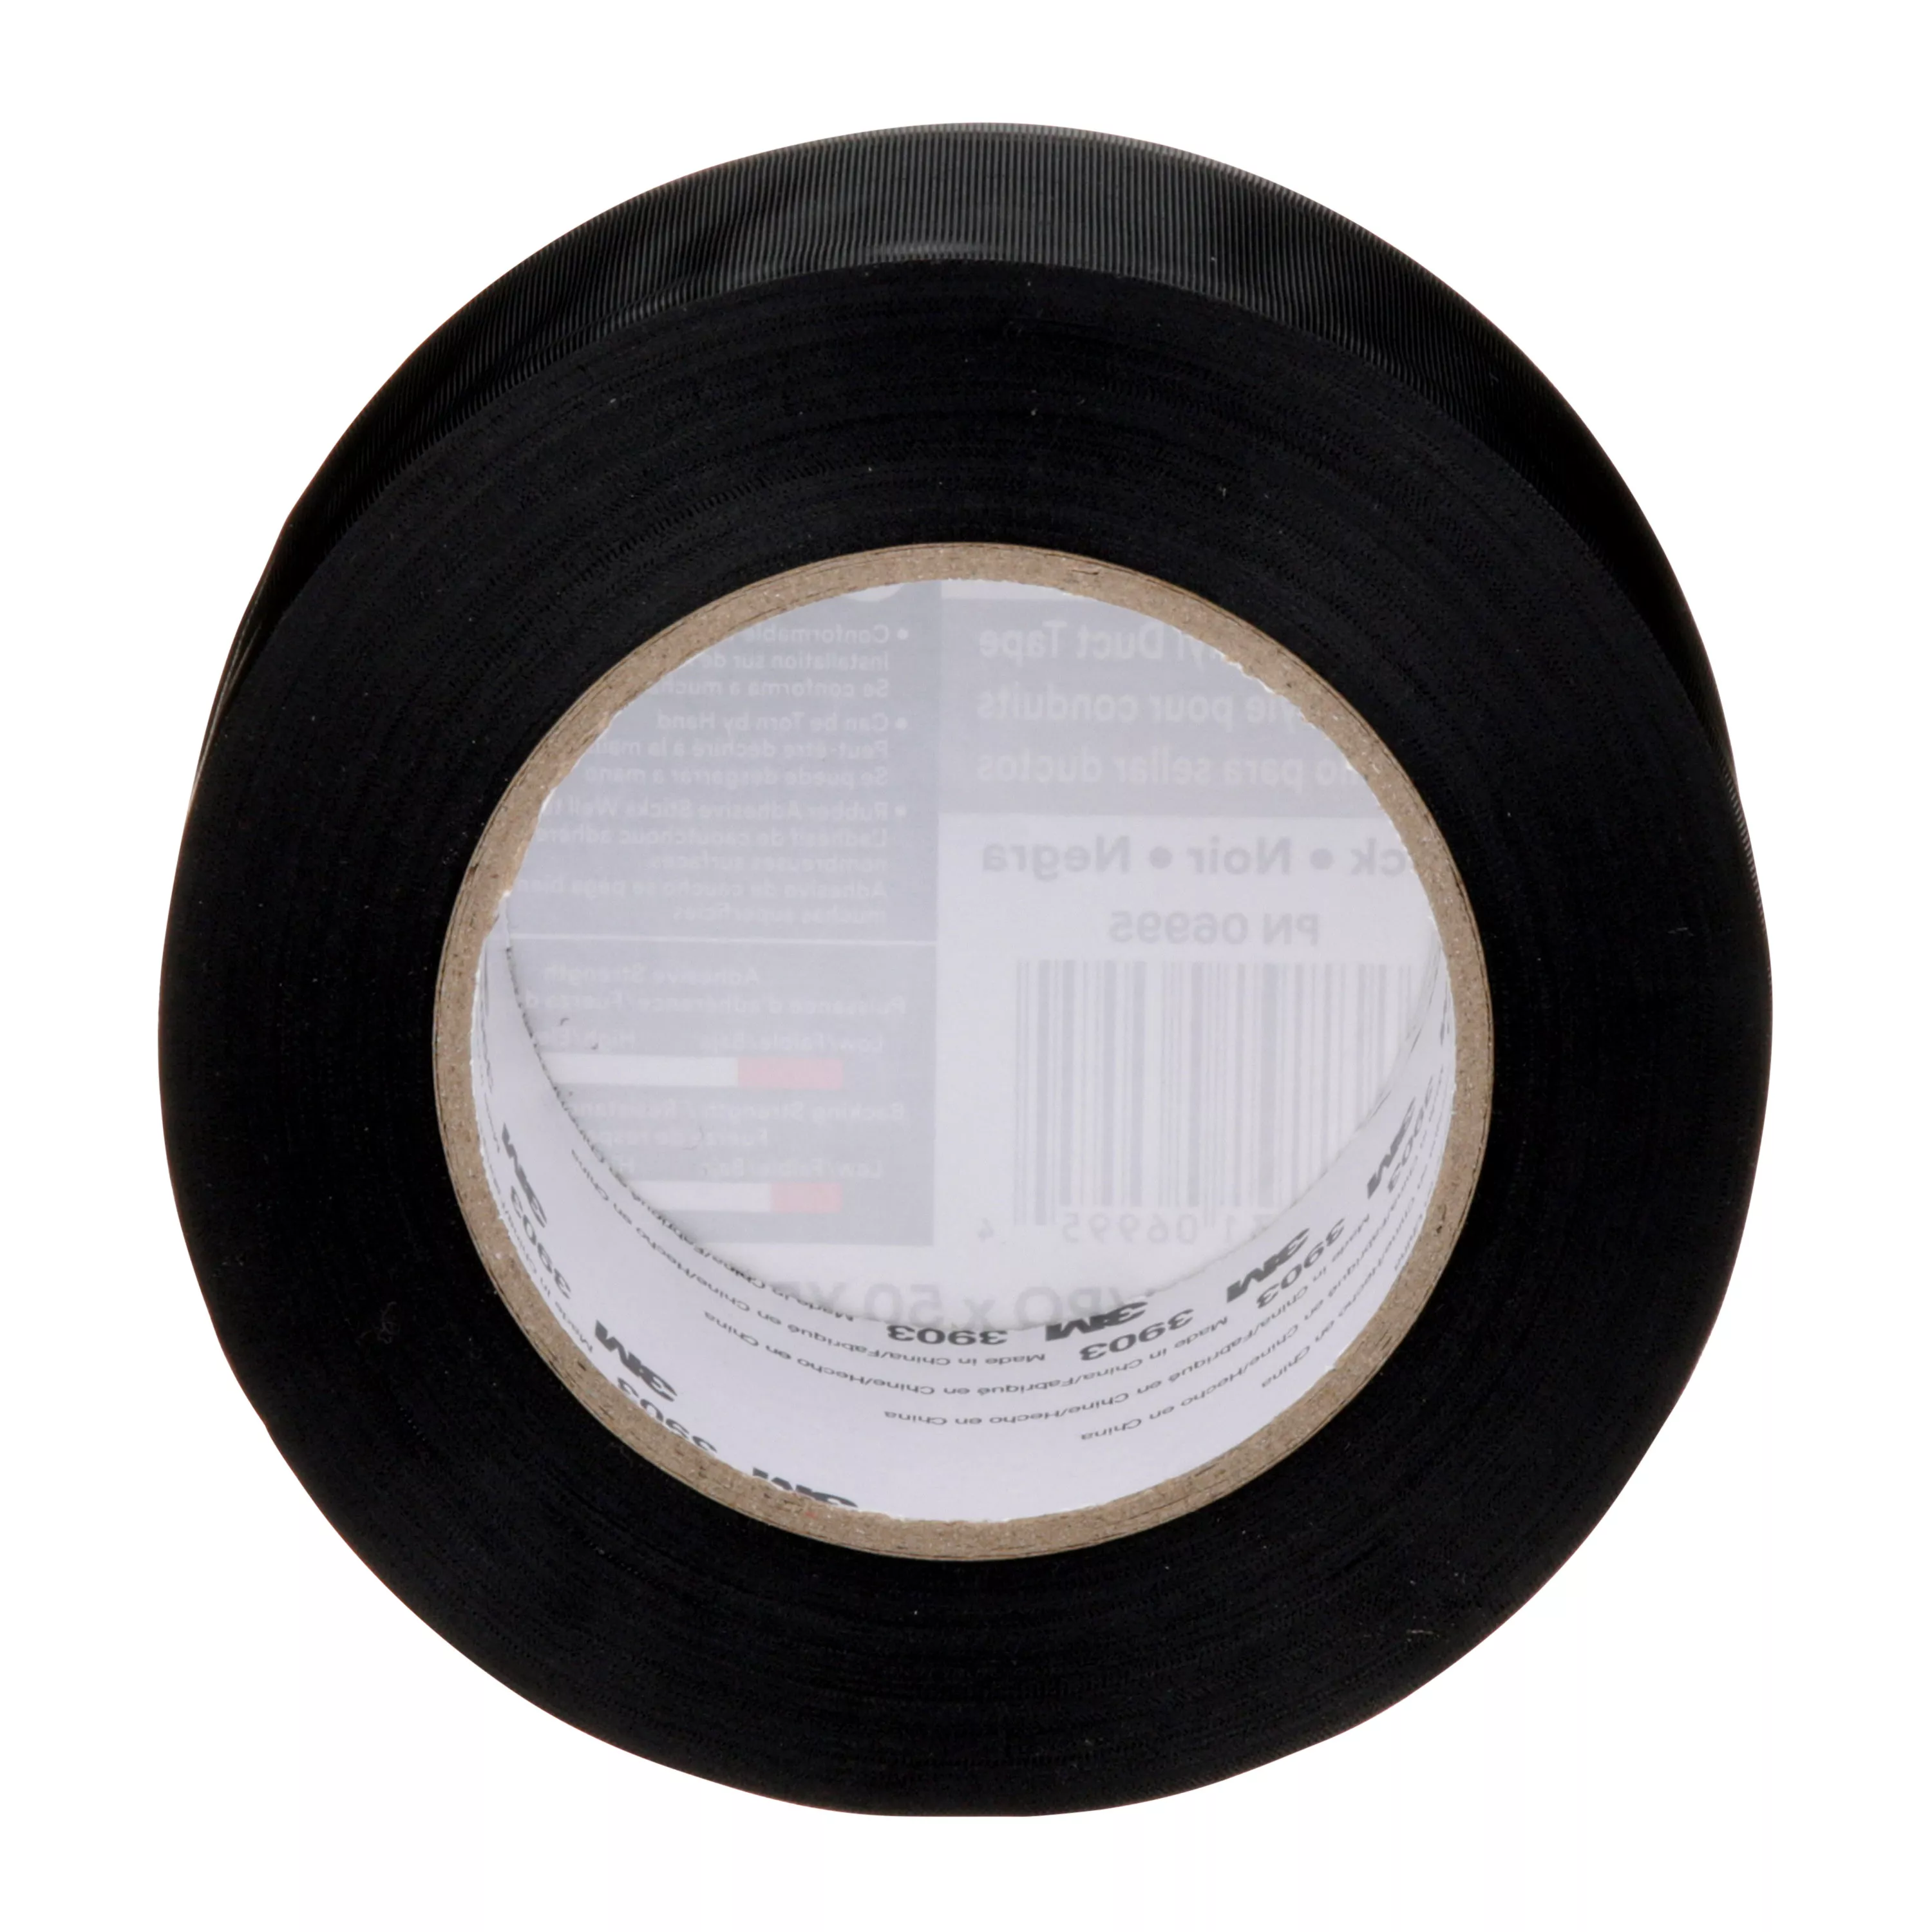 SKU 7100145924 | 3M™ Vinyl Duct Tape 3903